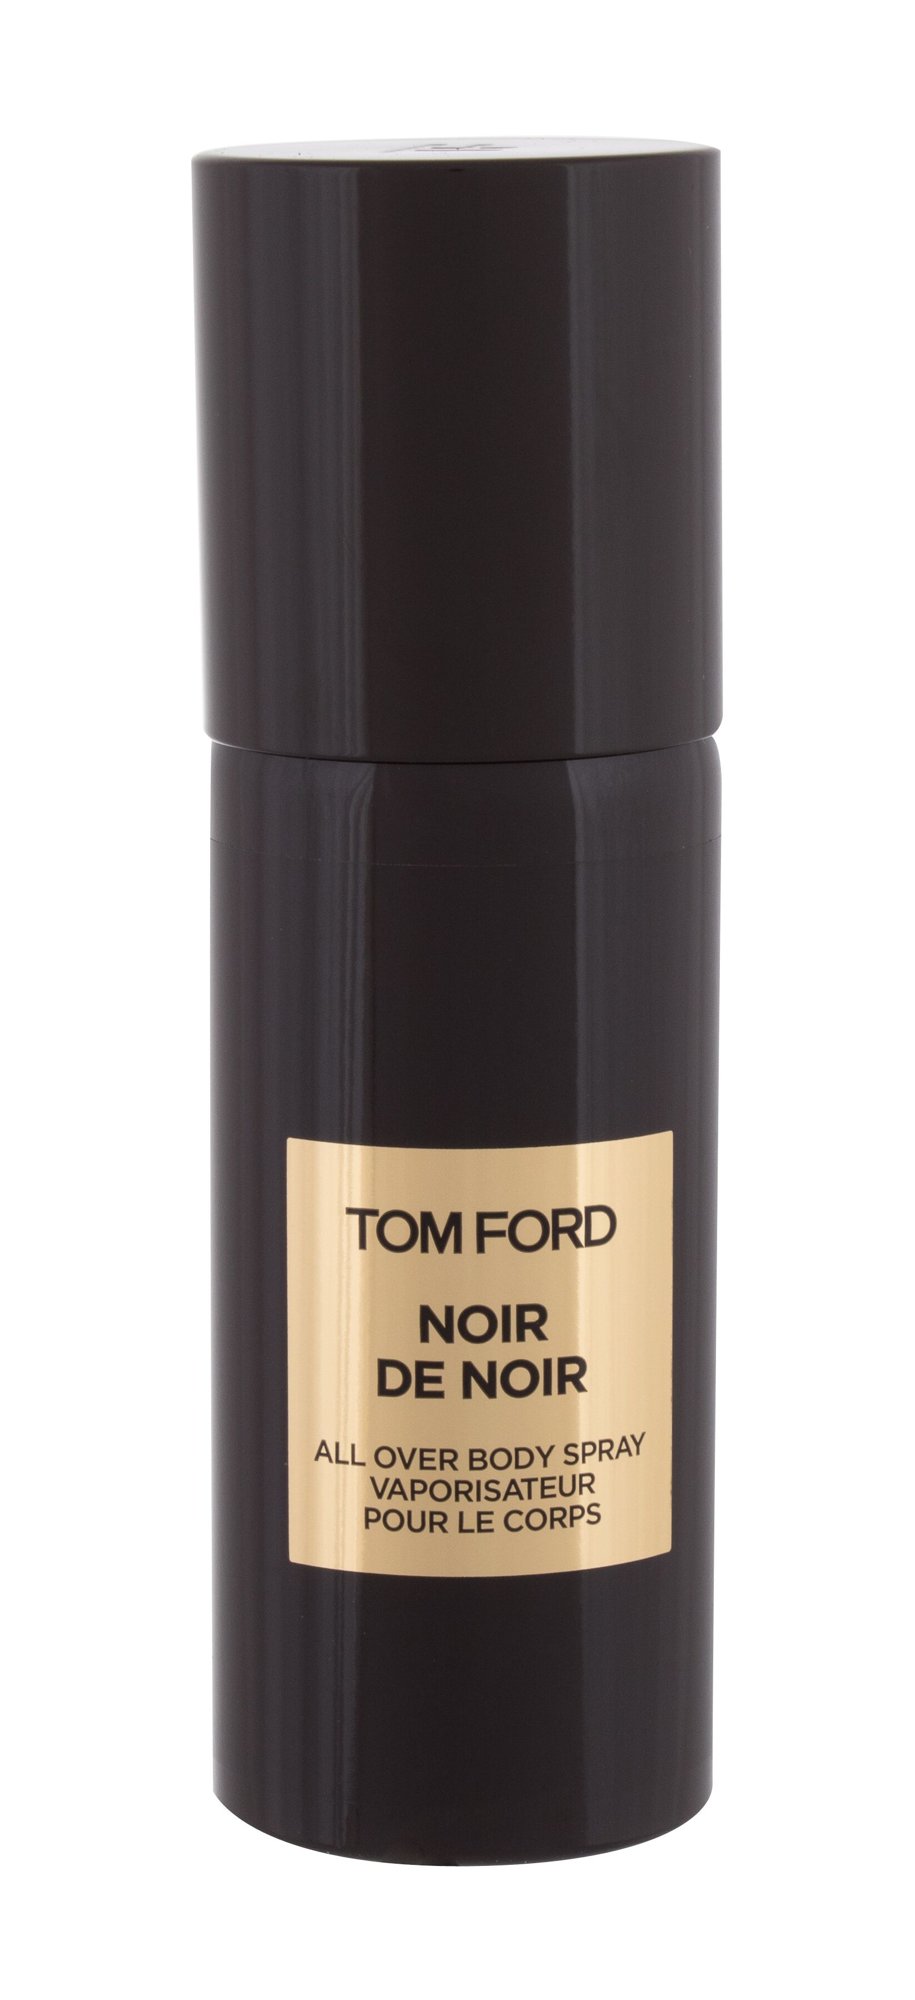 Tom Ford Noir de Noir NIŠINIAI dezodorantas